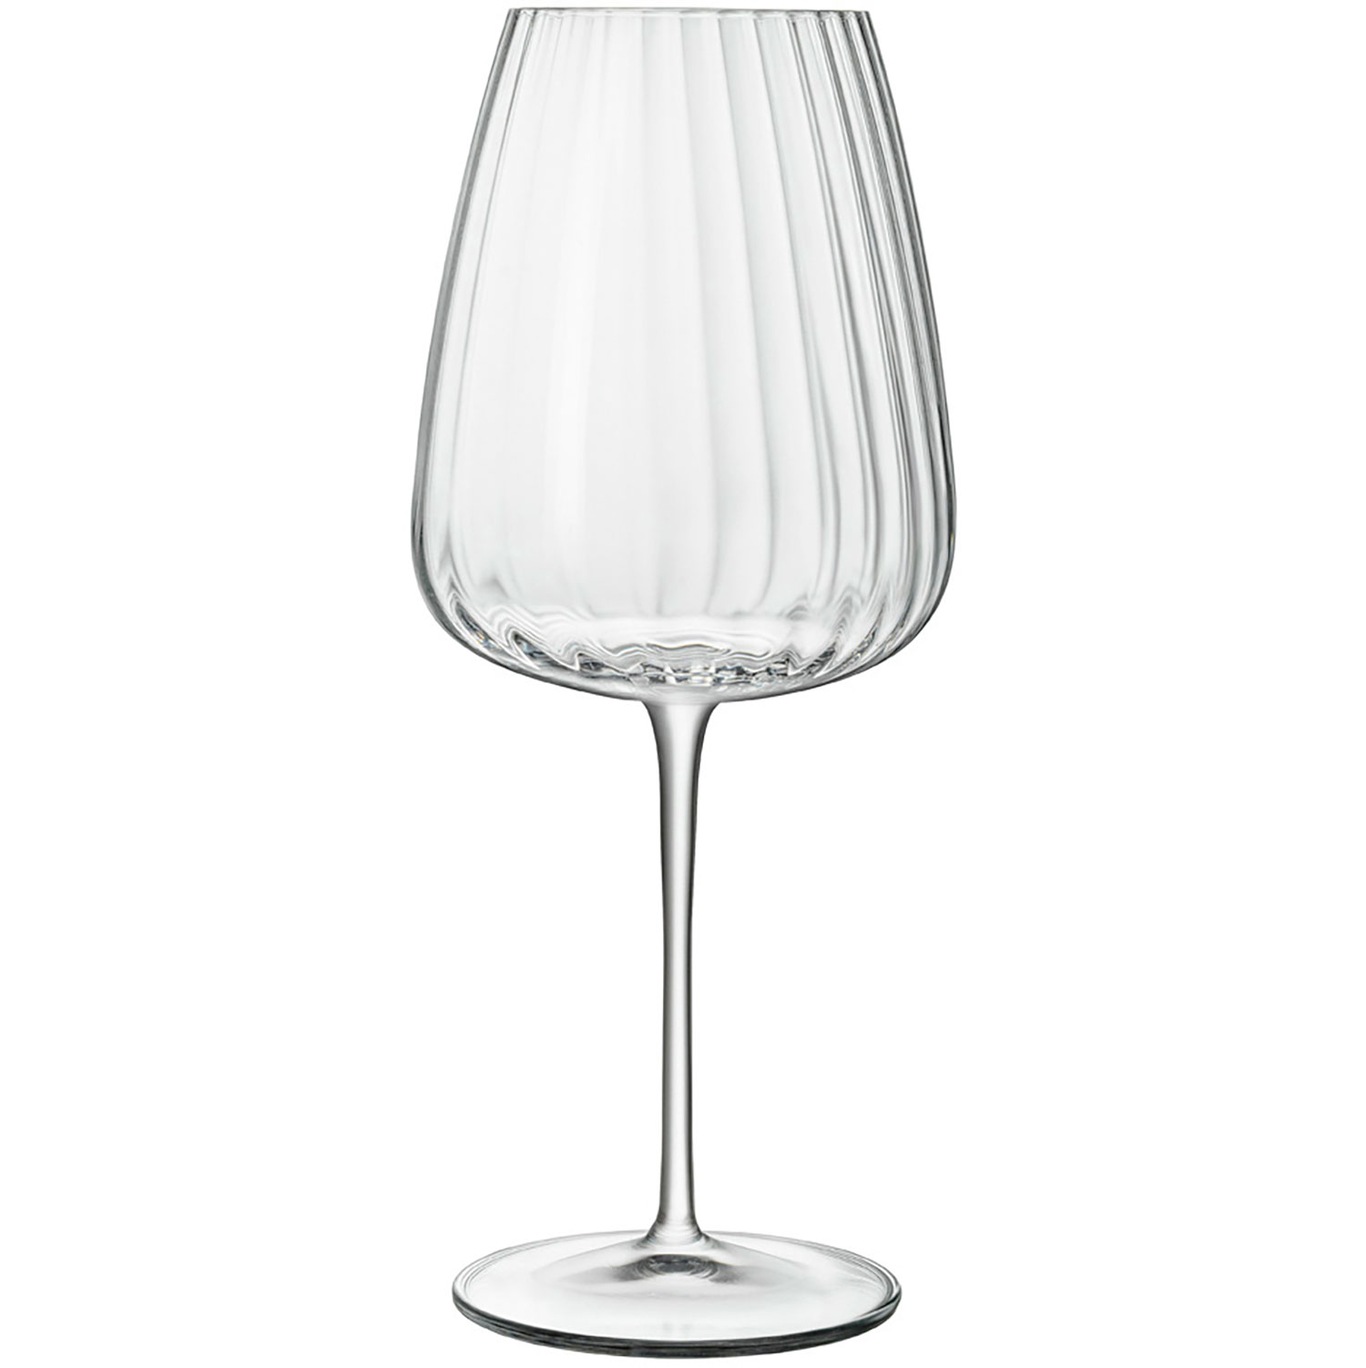 https://royaldesign.com/image/2/luigi-bormioli-red-wine-glass-bordeaux-optica-70-cl-4-pcs-0?w=800&quality=80